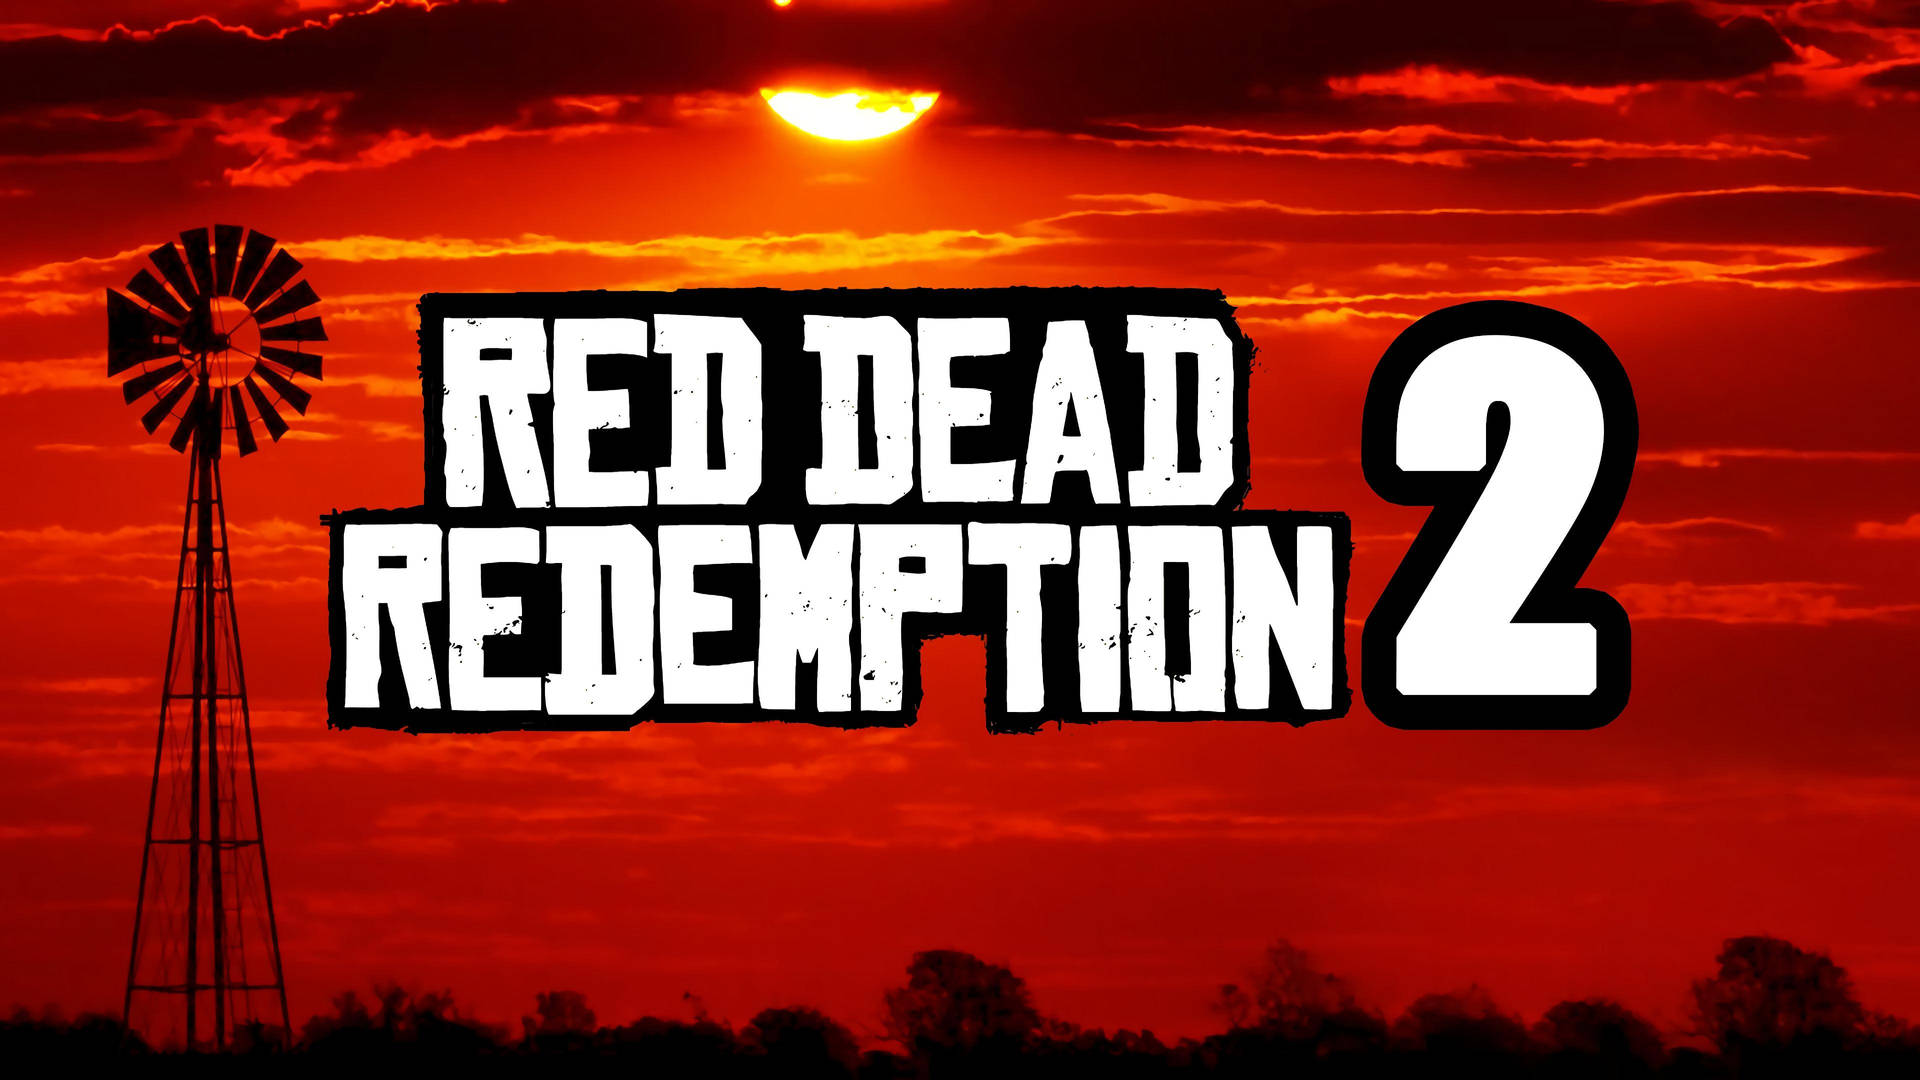 Red Dead Redemption 2 4K Windmølle Tapet kommer med en fantastisk retro-inspireret, grafisk tekstur. Wallpaper